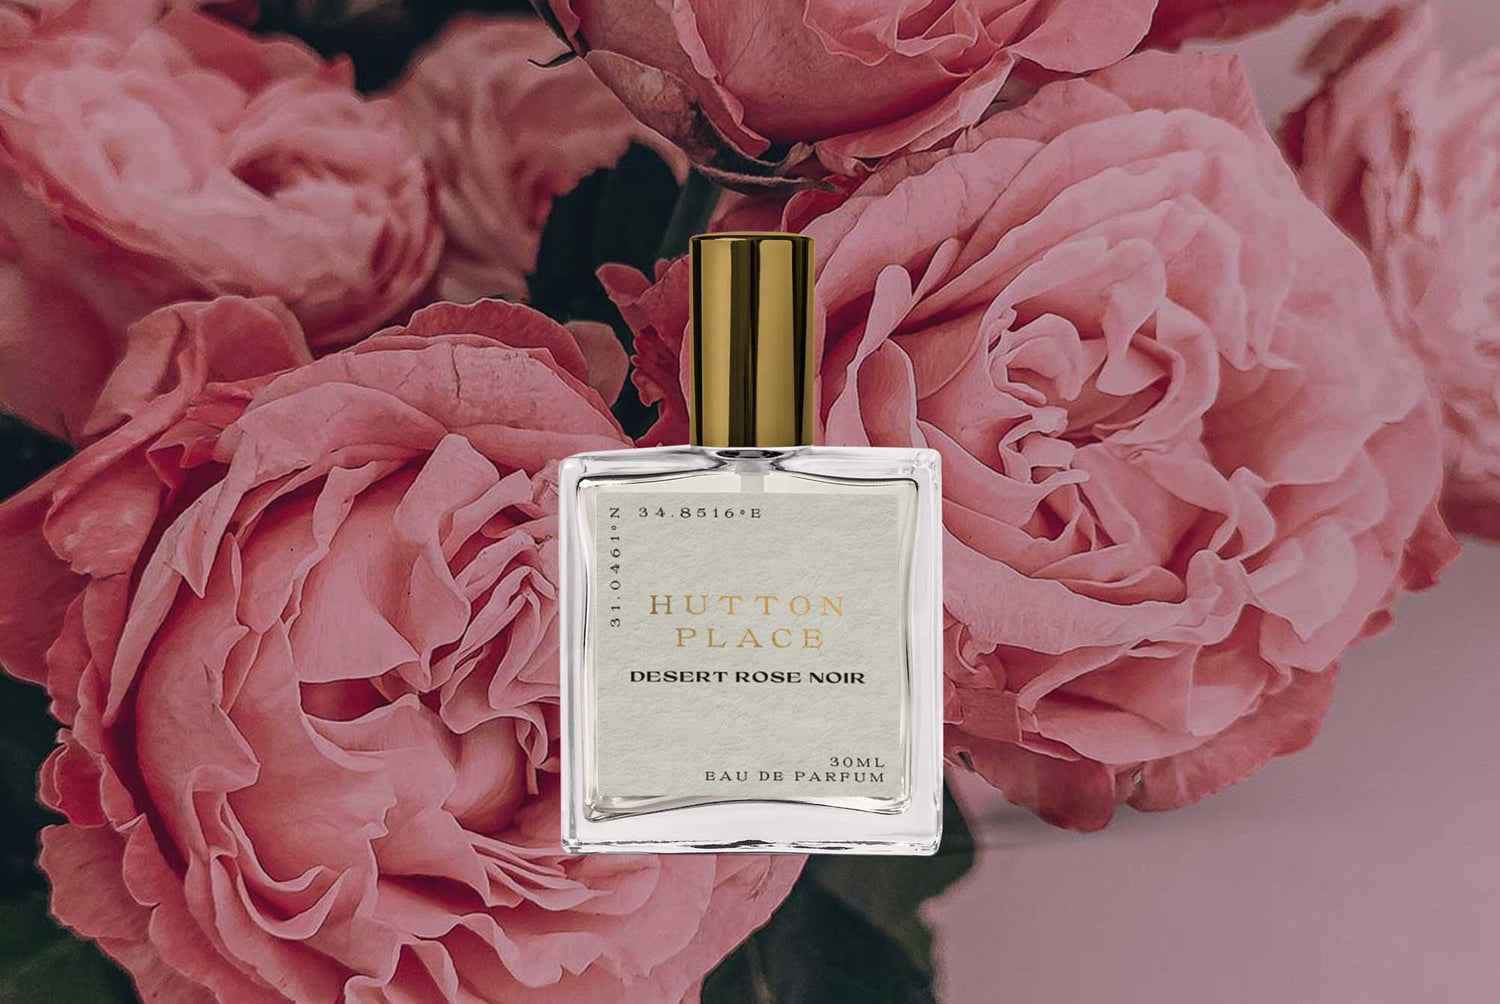 Desert Rose Noir perfume by Hutton Place